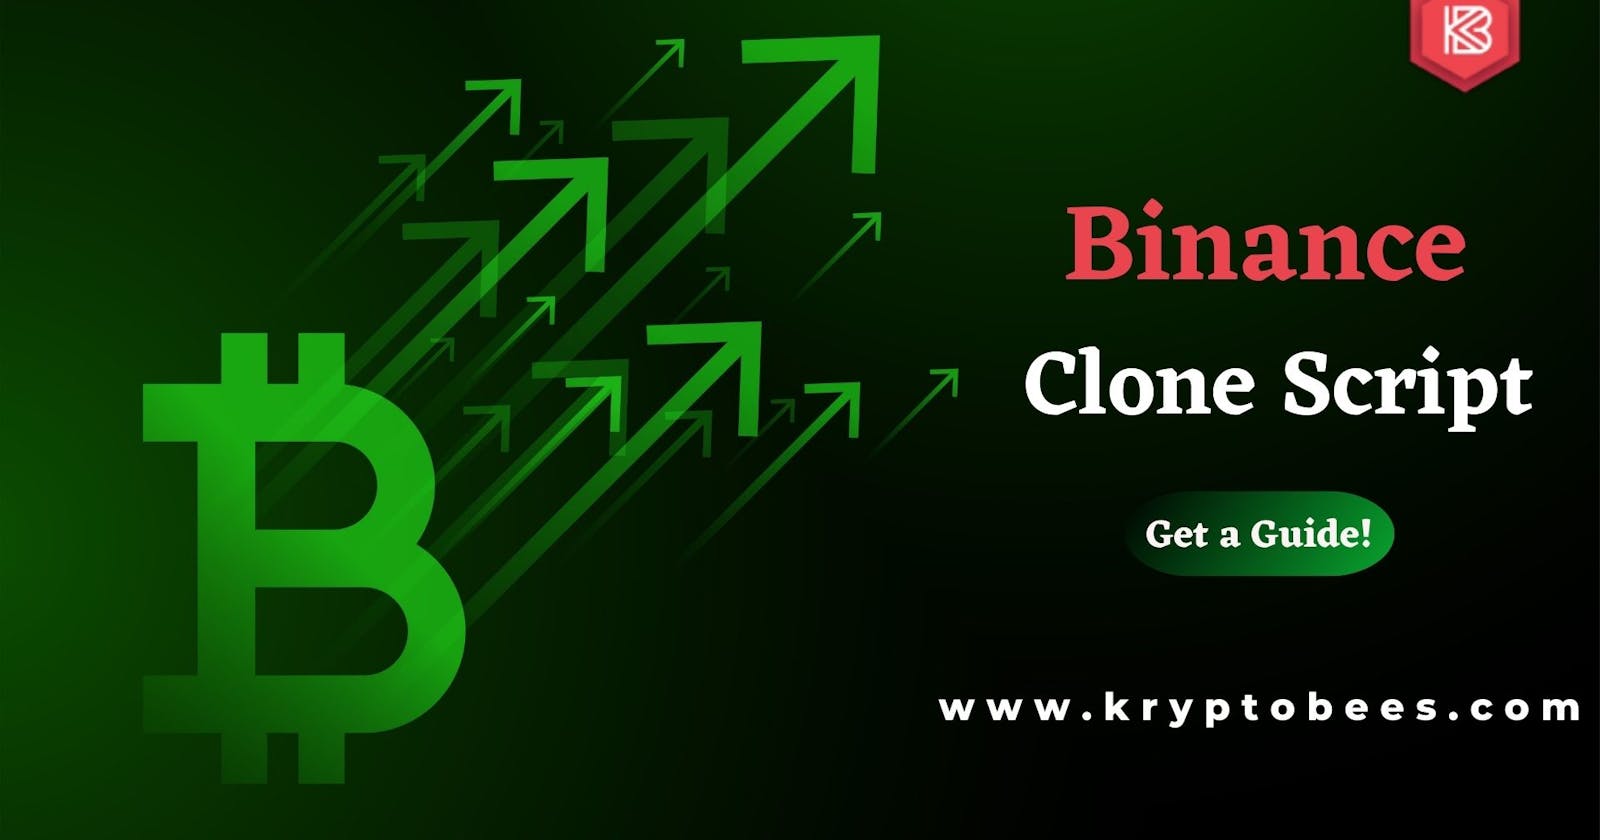 Benefits Of Building An Crypto Exchange Like Binance Using Binance Clone: